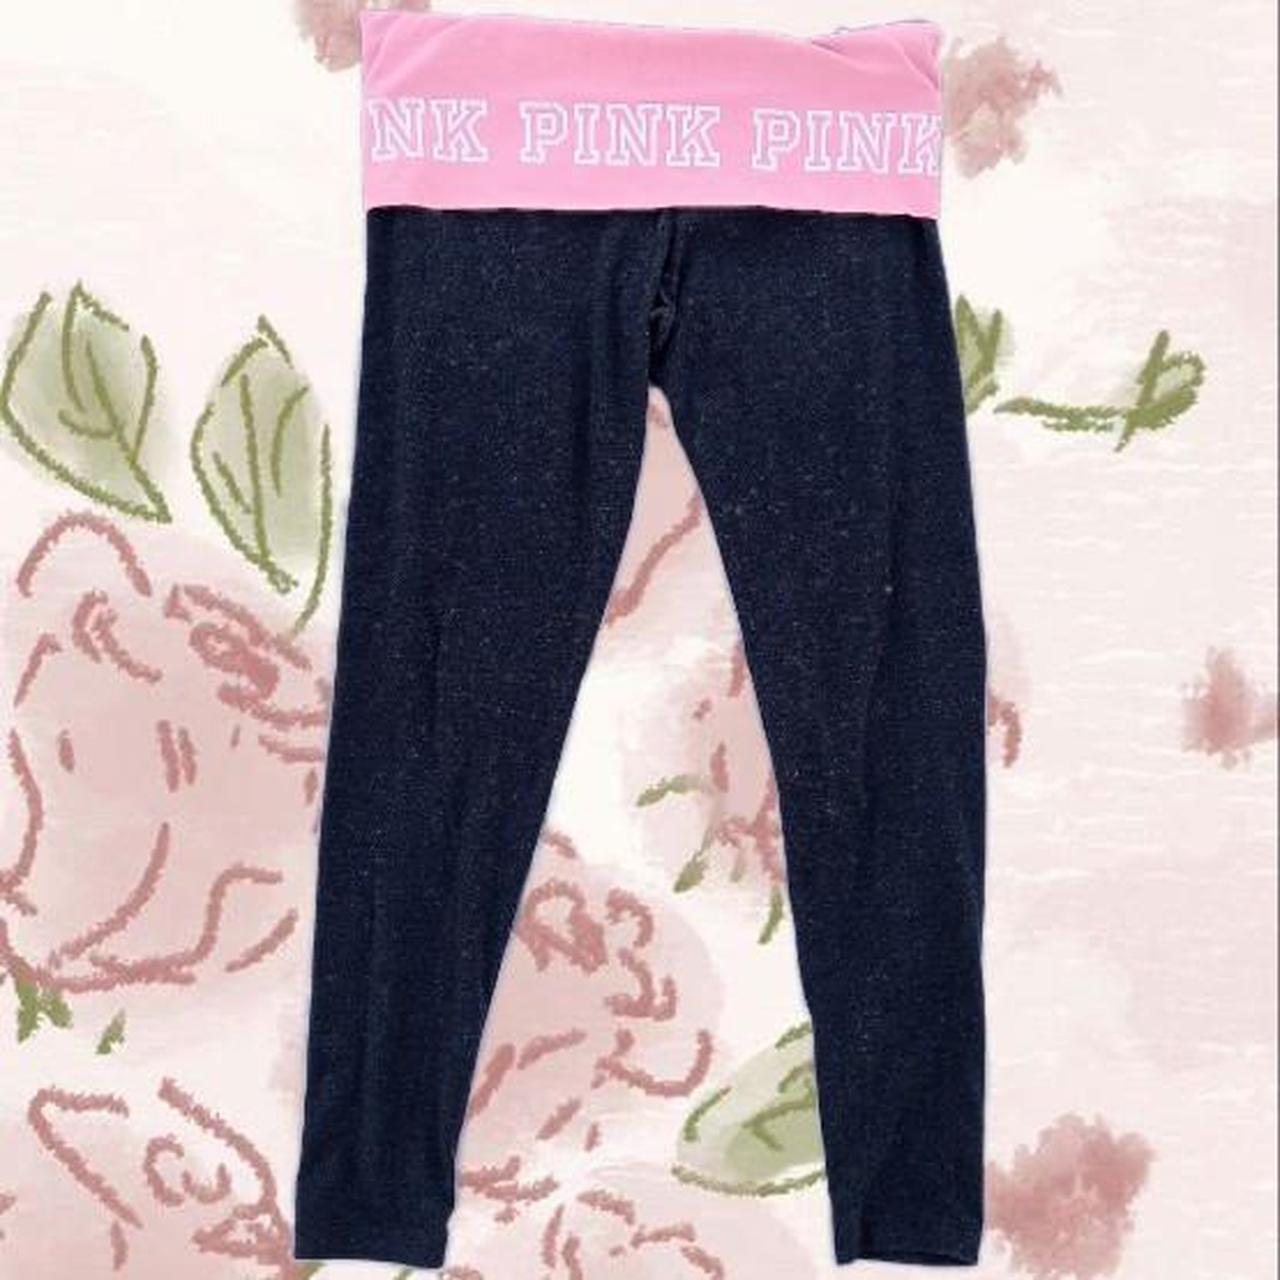 Pink Victoria Secret Ultimate leggings size large